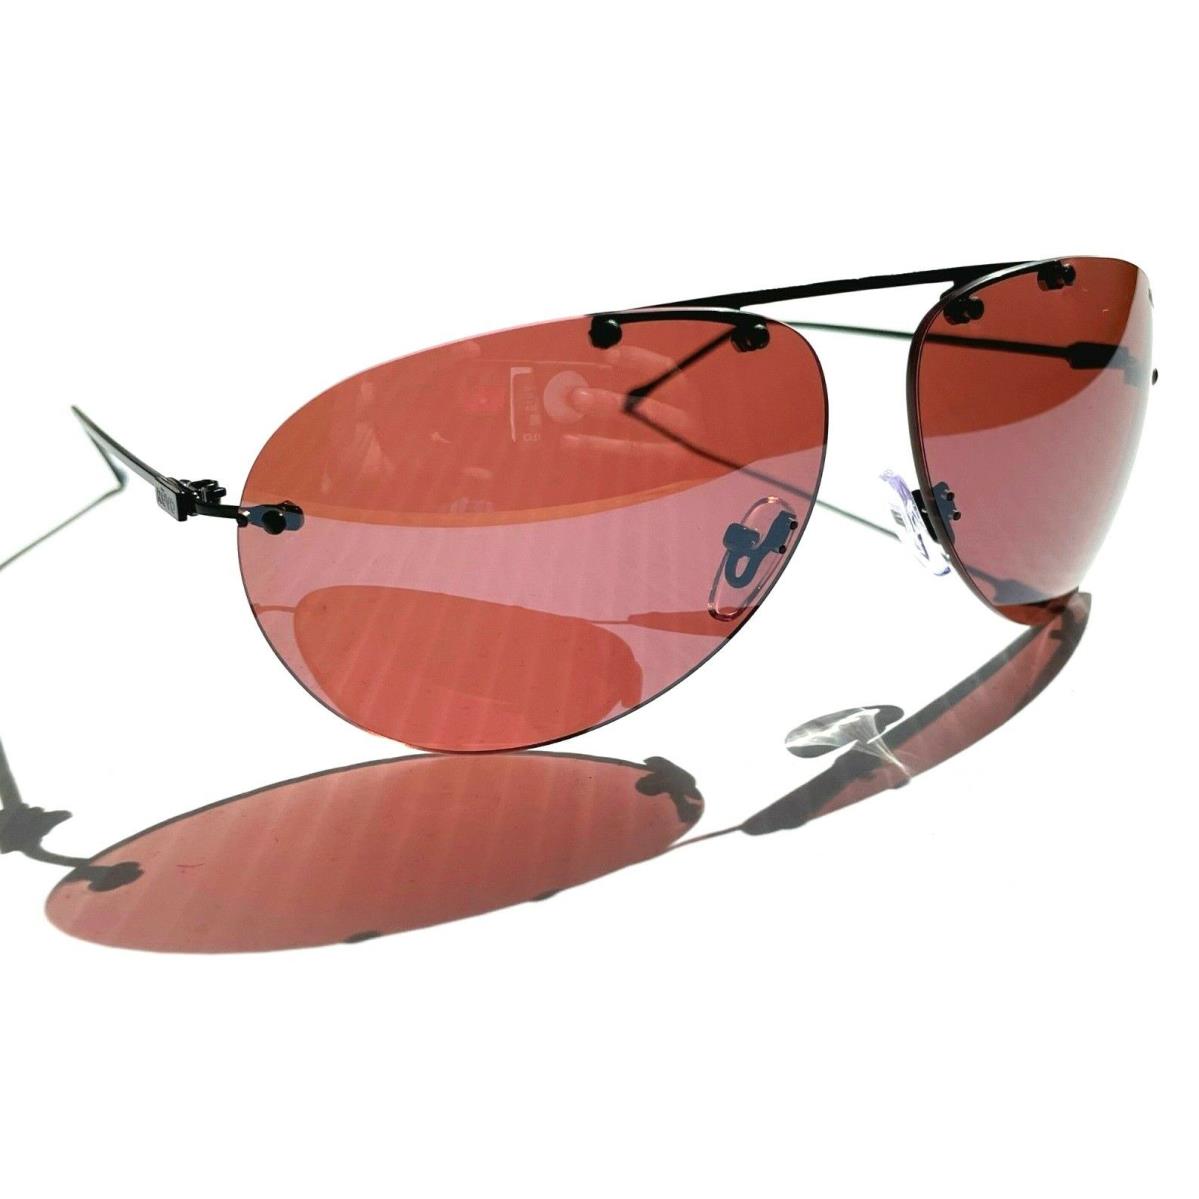 Revo sunglasses AIR - Black Satin Frame, Brown Lens